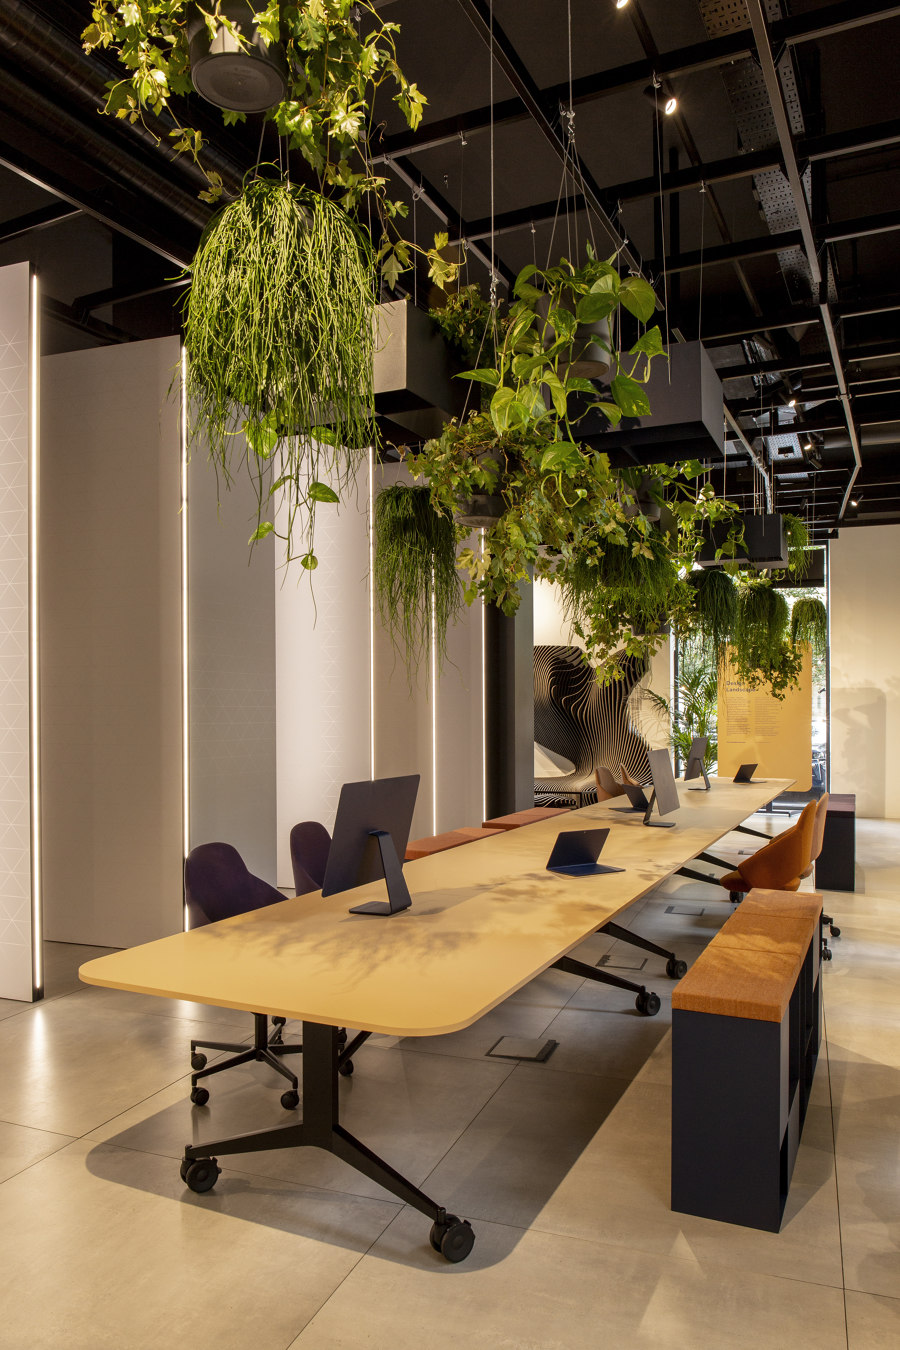 Mara’s Milan manifesto: designing furniture that makes us feel | Nouveautés